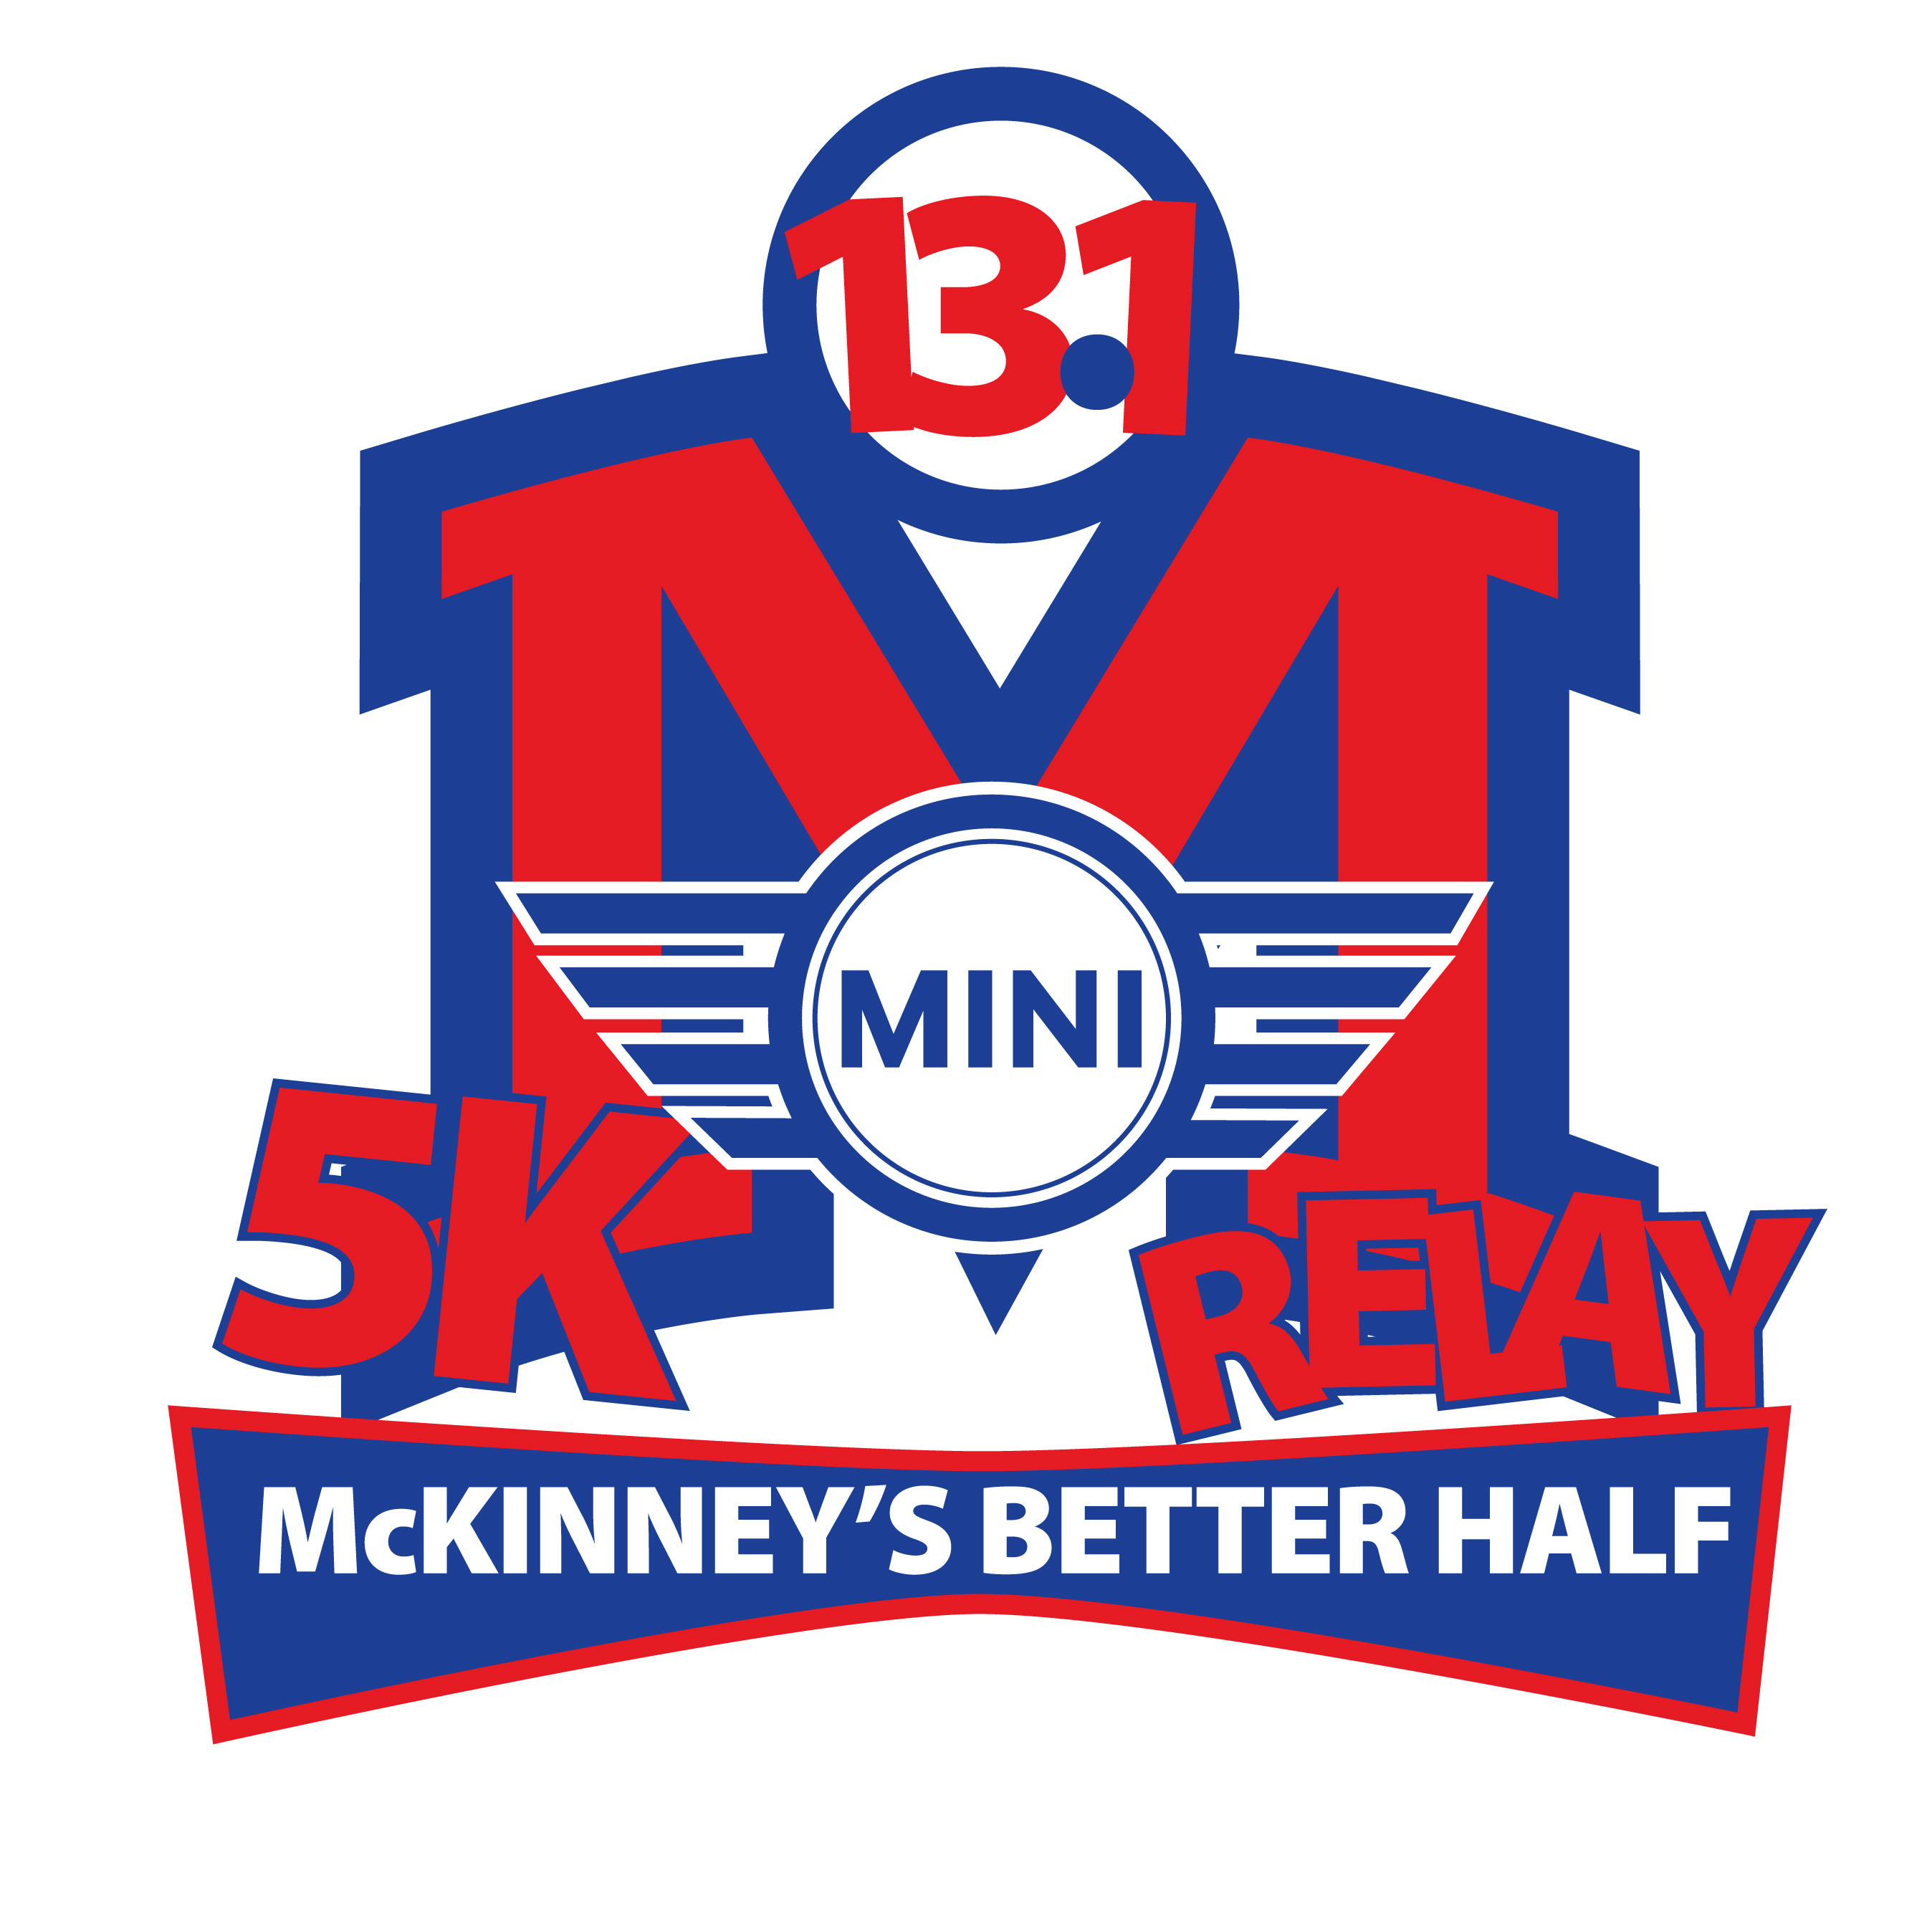 McKinney Mini Half Marathon Returning on November 8th